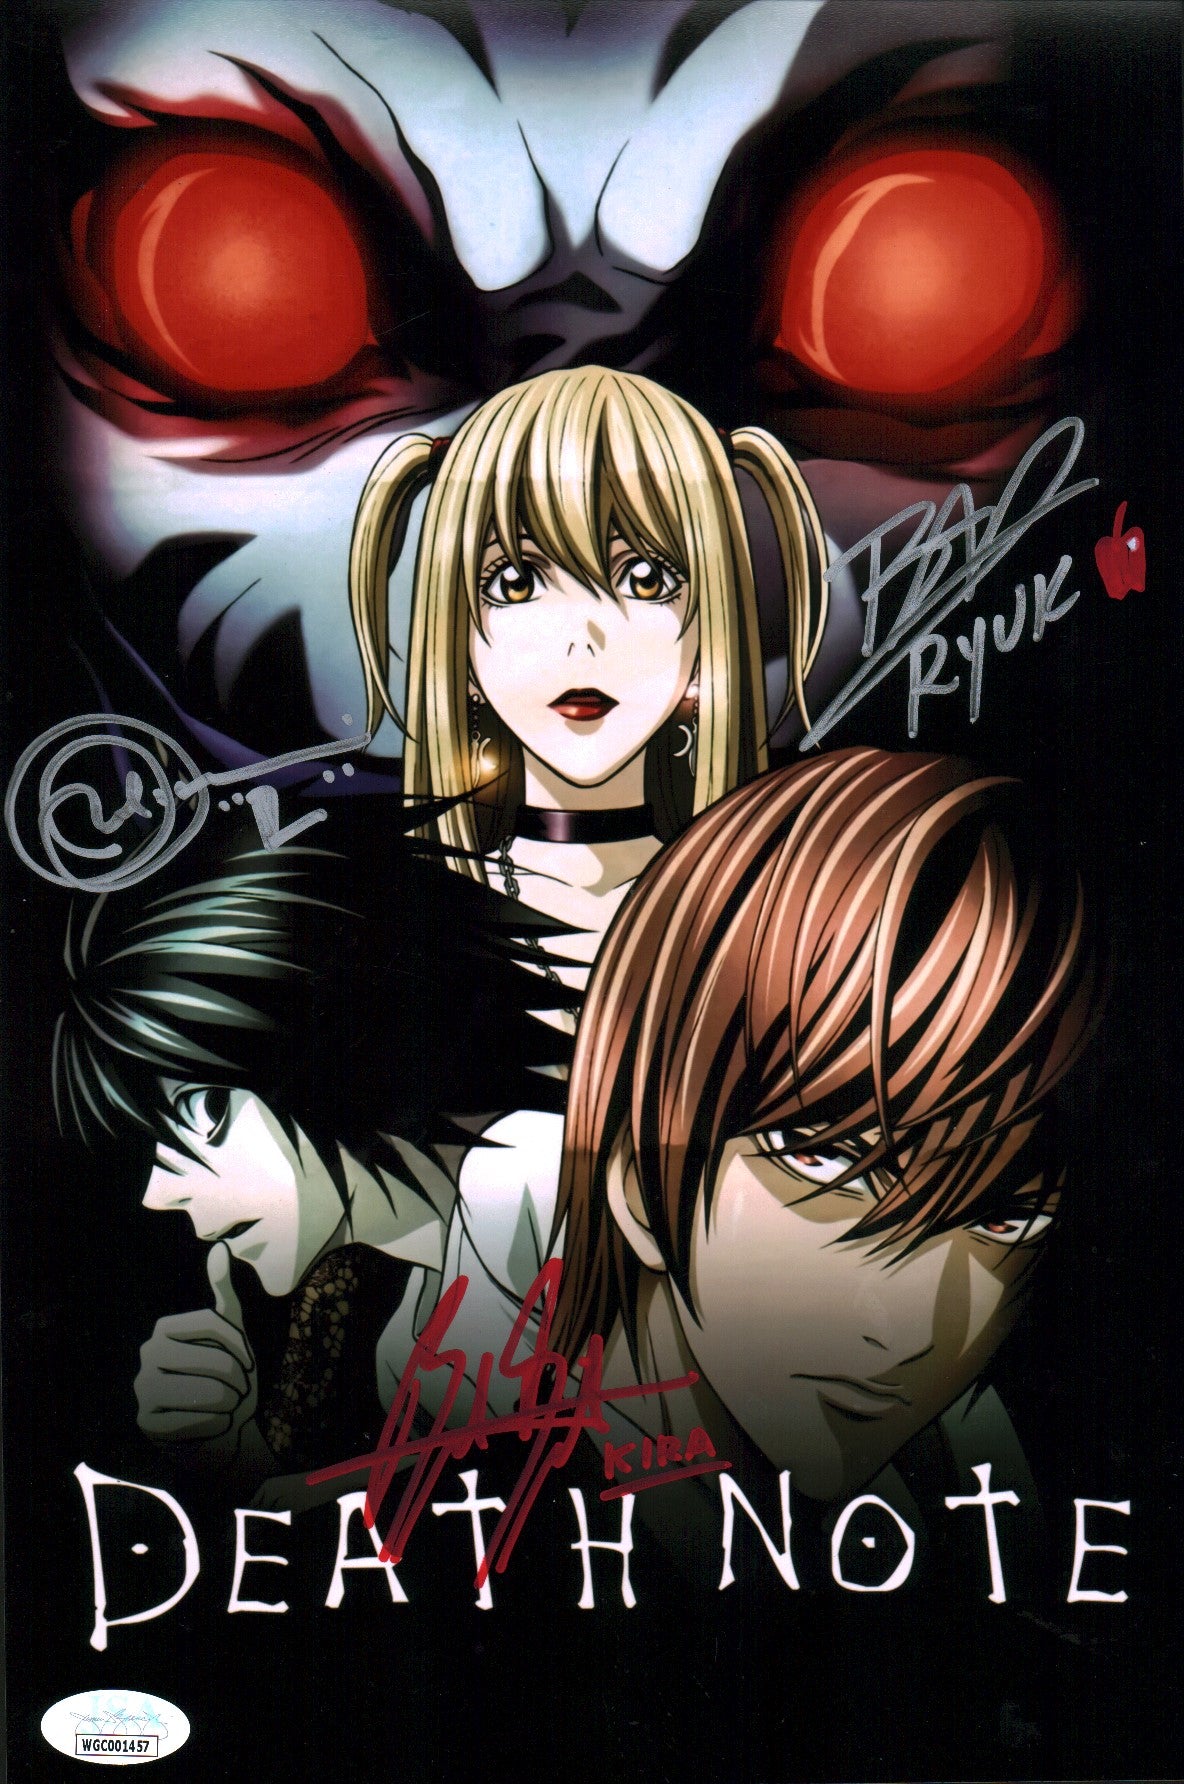 Death Note 11x17 Signed Cast x3 Drummond Juliani Swaile Photo Poster JSA COA Certified Autograph